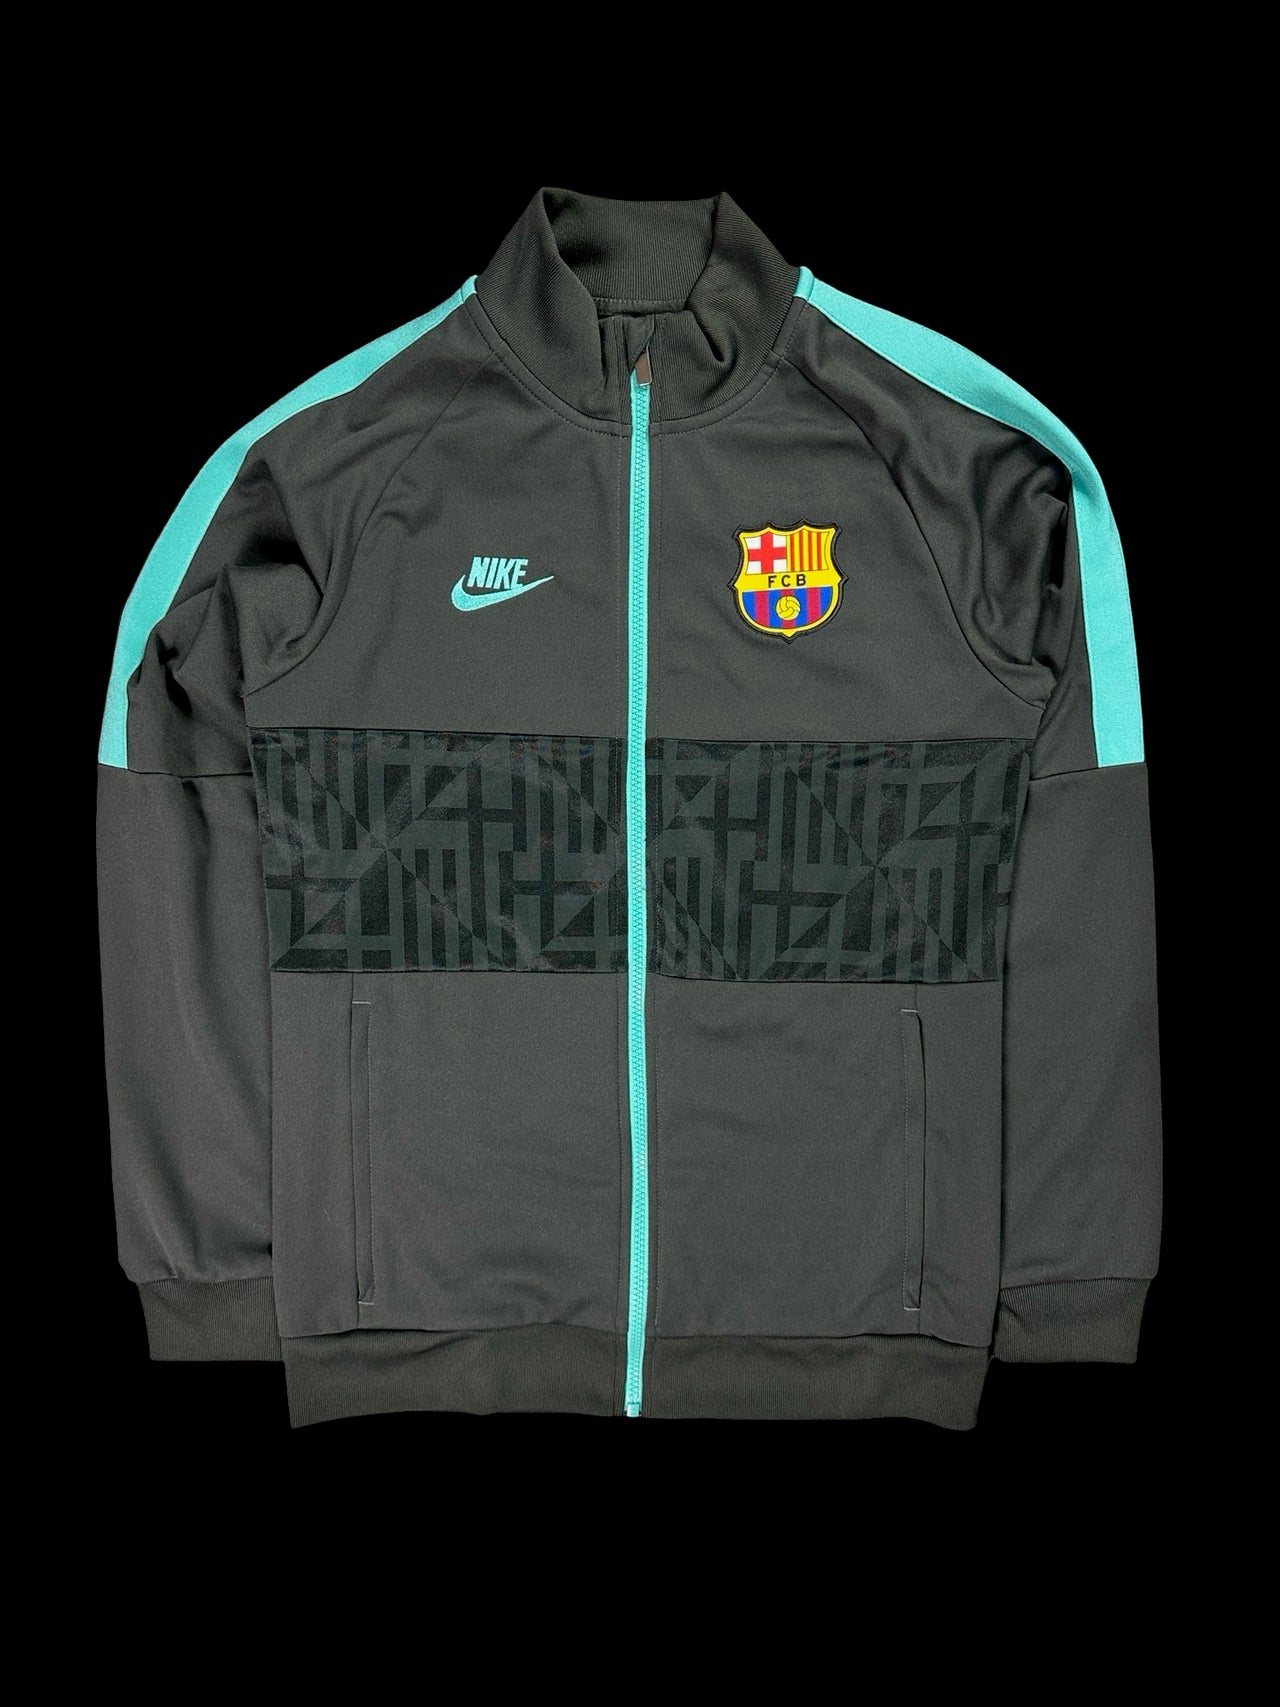 Nike x FC Barcelona Trackjacket (S)